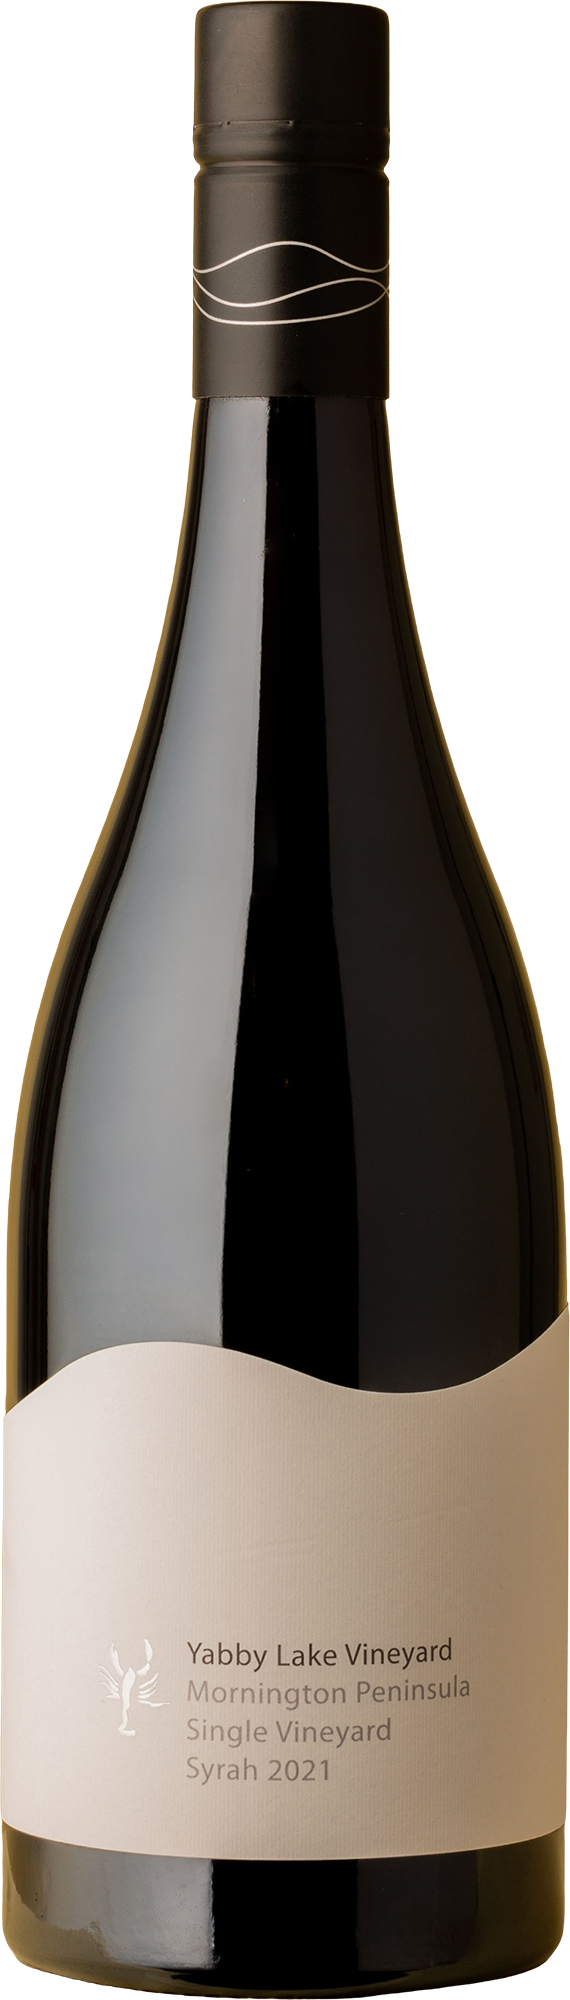 Yabby Lake - Single Vineyard Syrah 2021 Red Wine